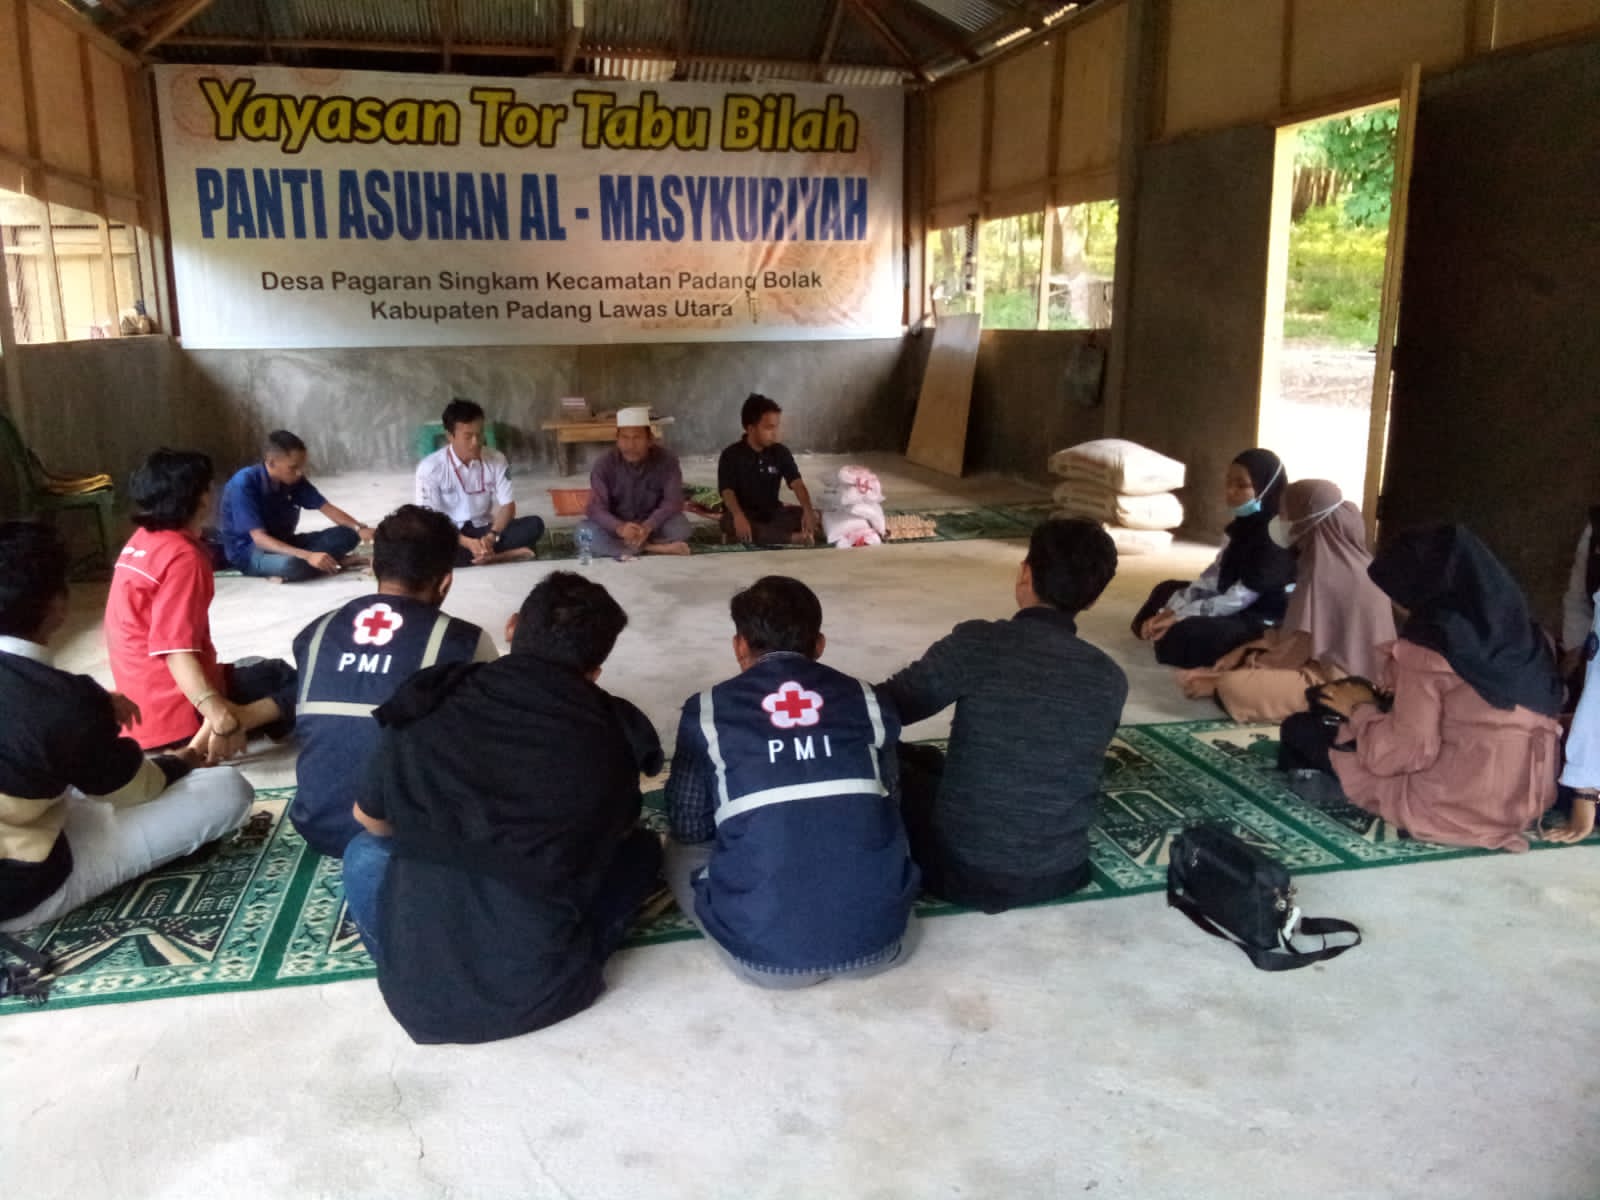 Suasana kegiatan relawan PMI Kabupaten Paluta dalam rangka mengunjungi panti asuhan Al Masykuriyah di desa Pagaran Singkam, Kecamatan Padang Bolak, sekaligus penyerahan bantuan, Ahad (26/12/2021).